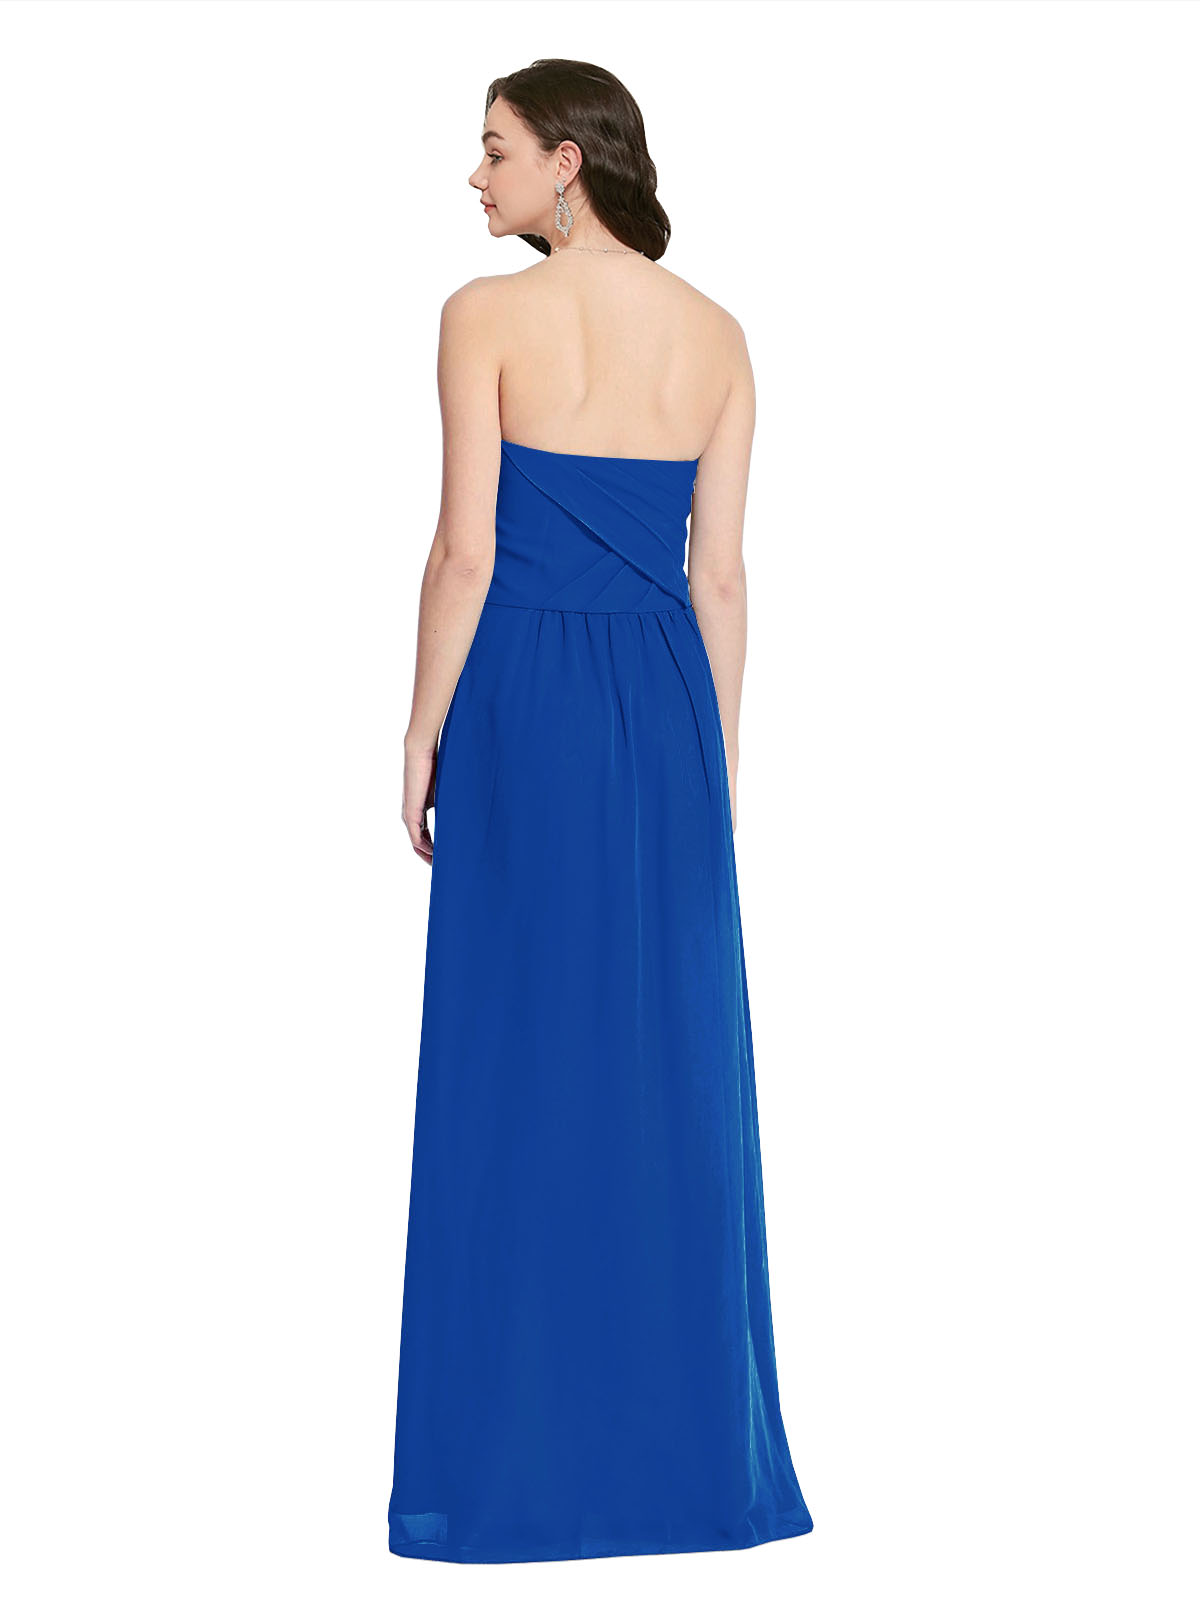 Long A-Line Strapless Sweetheart Sleeveless Royal Blue Chiffon Bridesmaid Dress Jenner